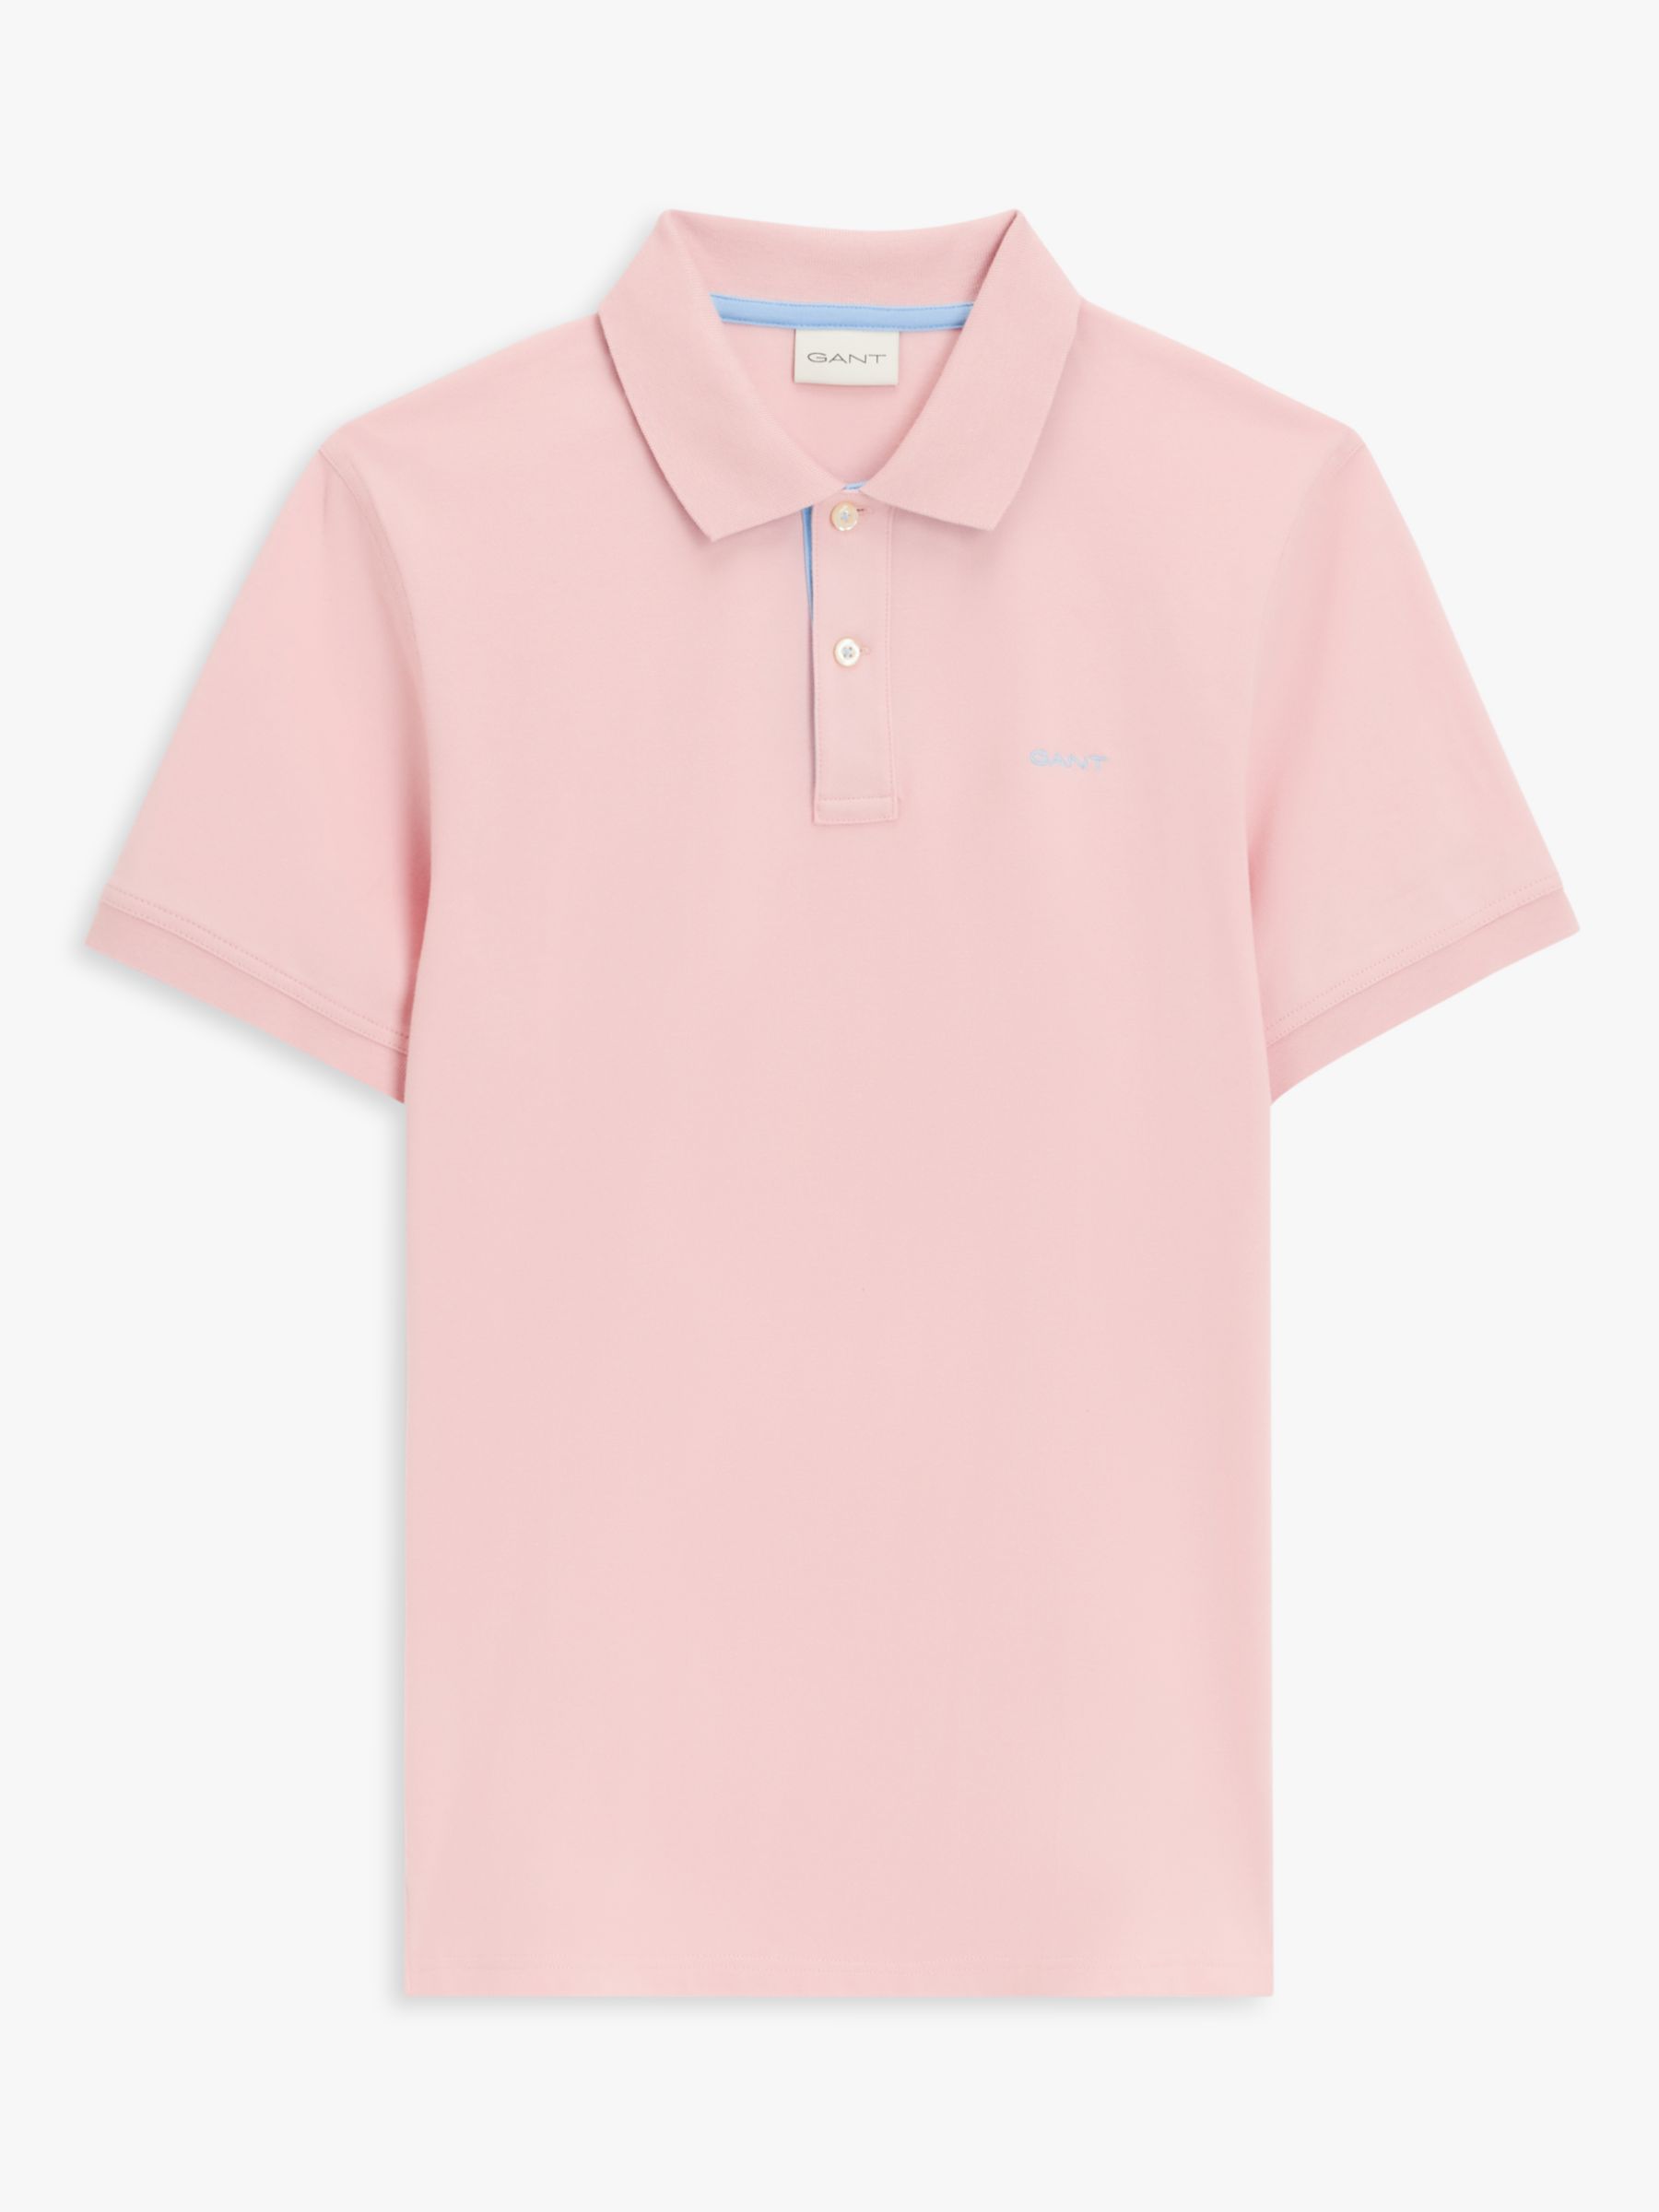 John GANT & Lewis at Shirt, Faded Piqué Pink Short Partners Textured Polo Sleeve